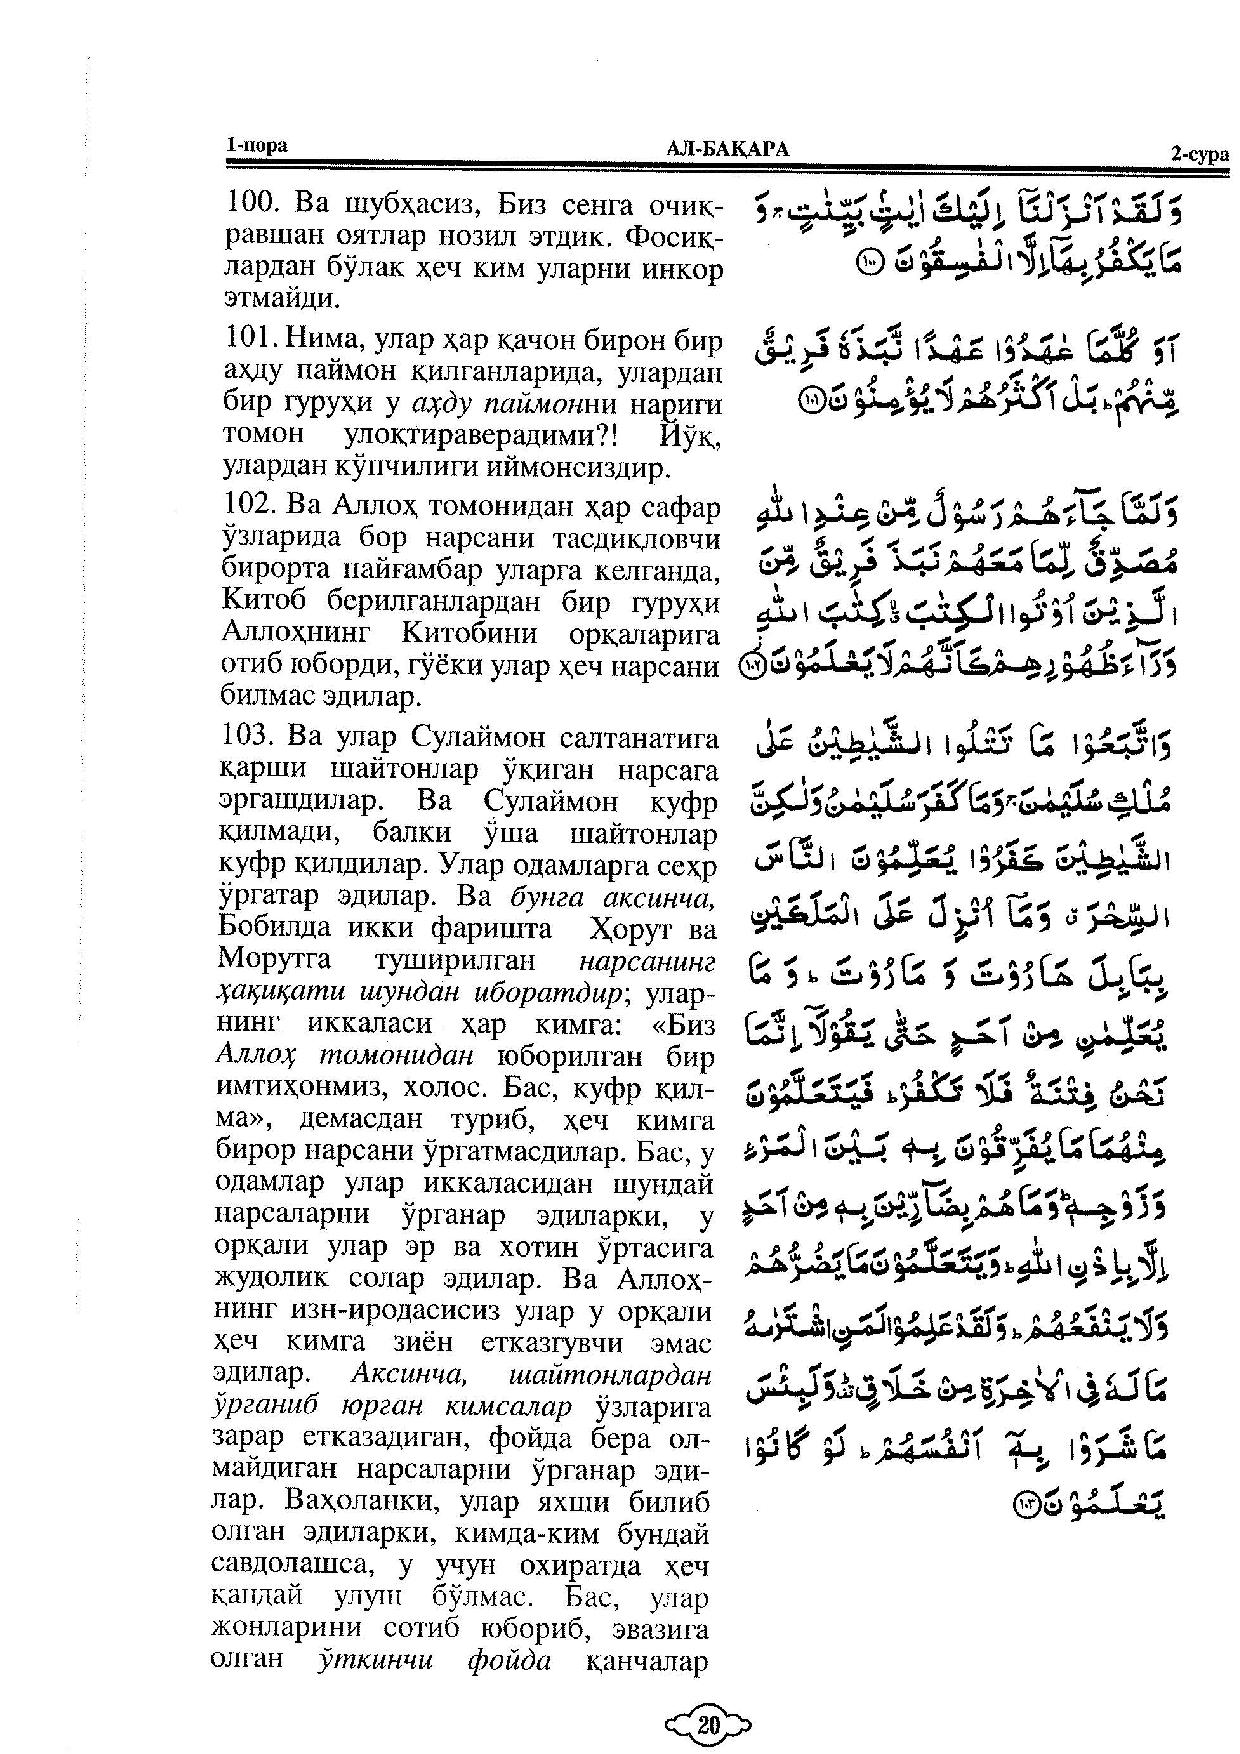 002-al-baqarah-page-018